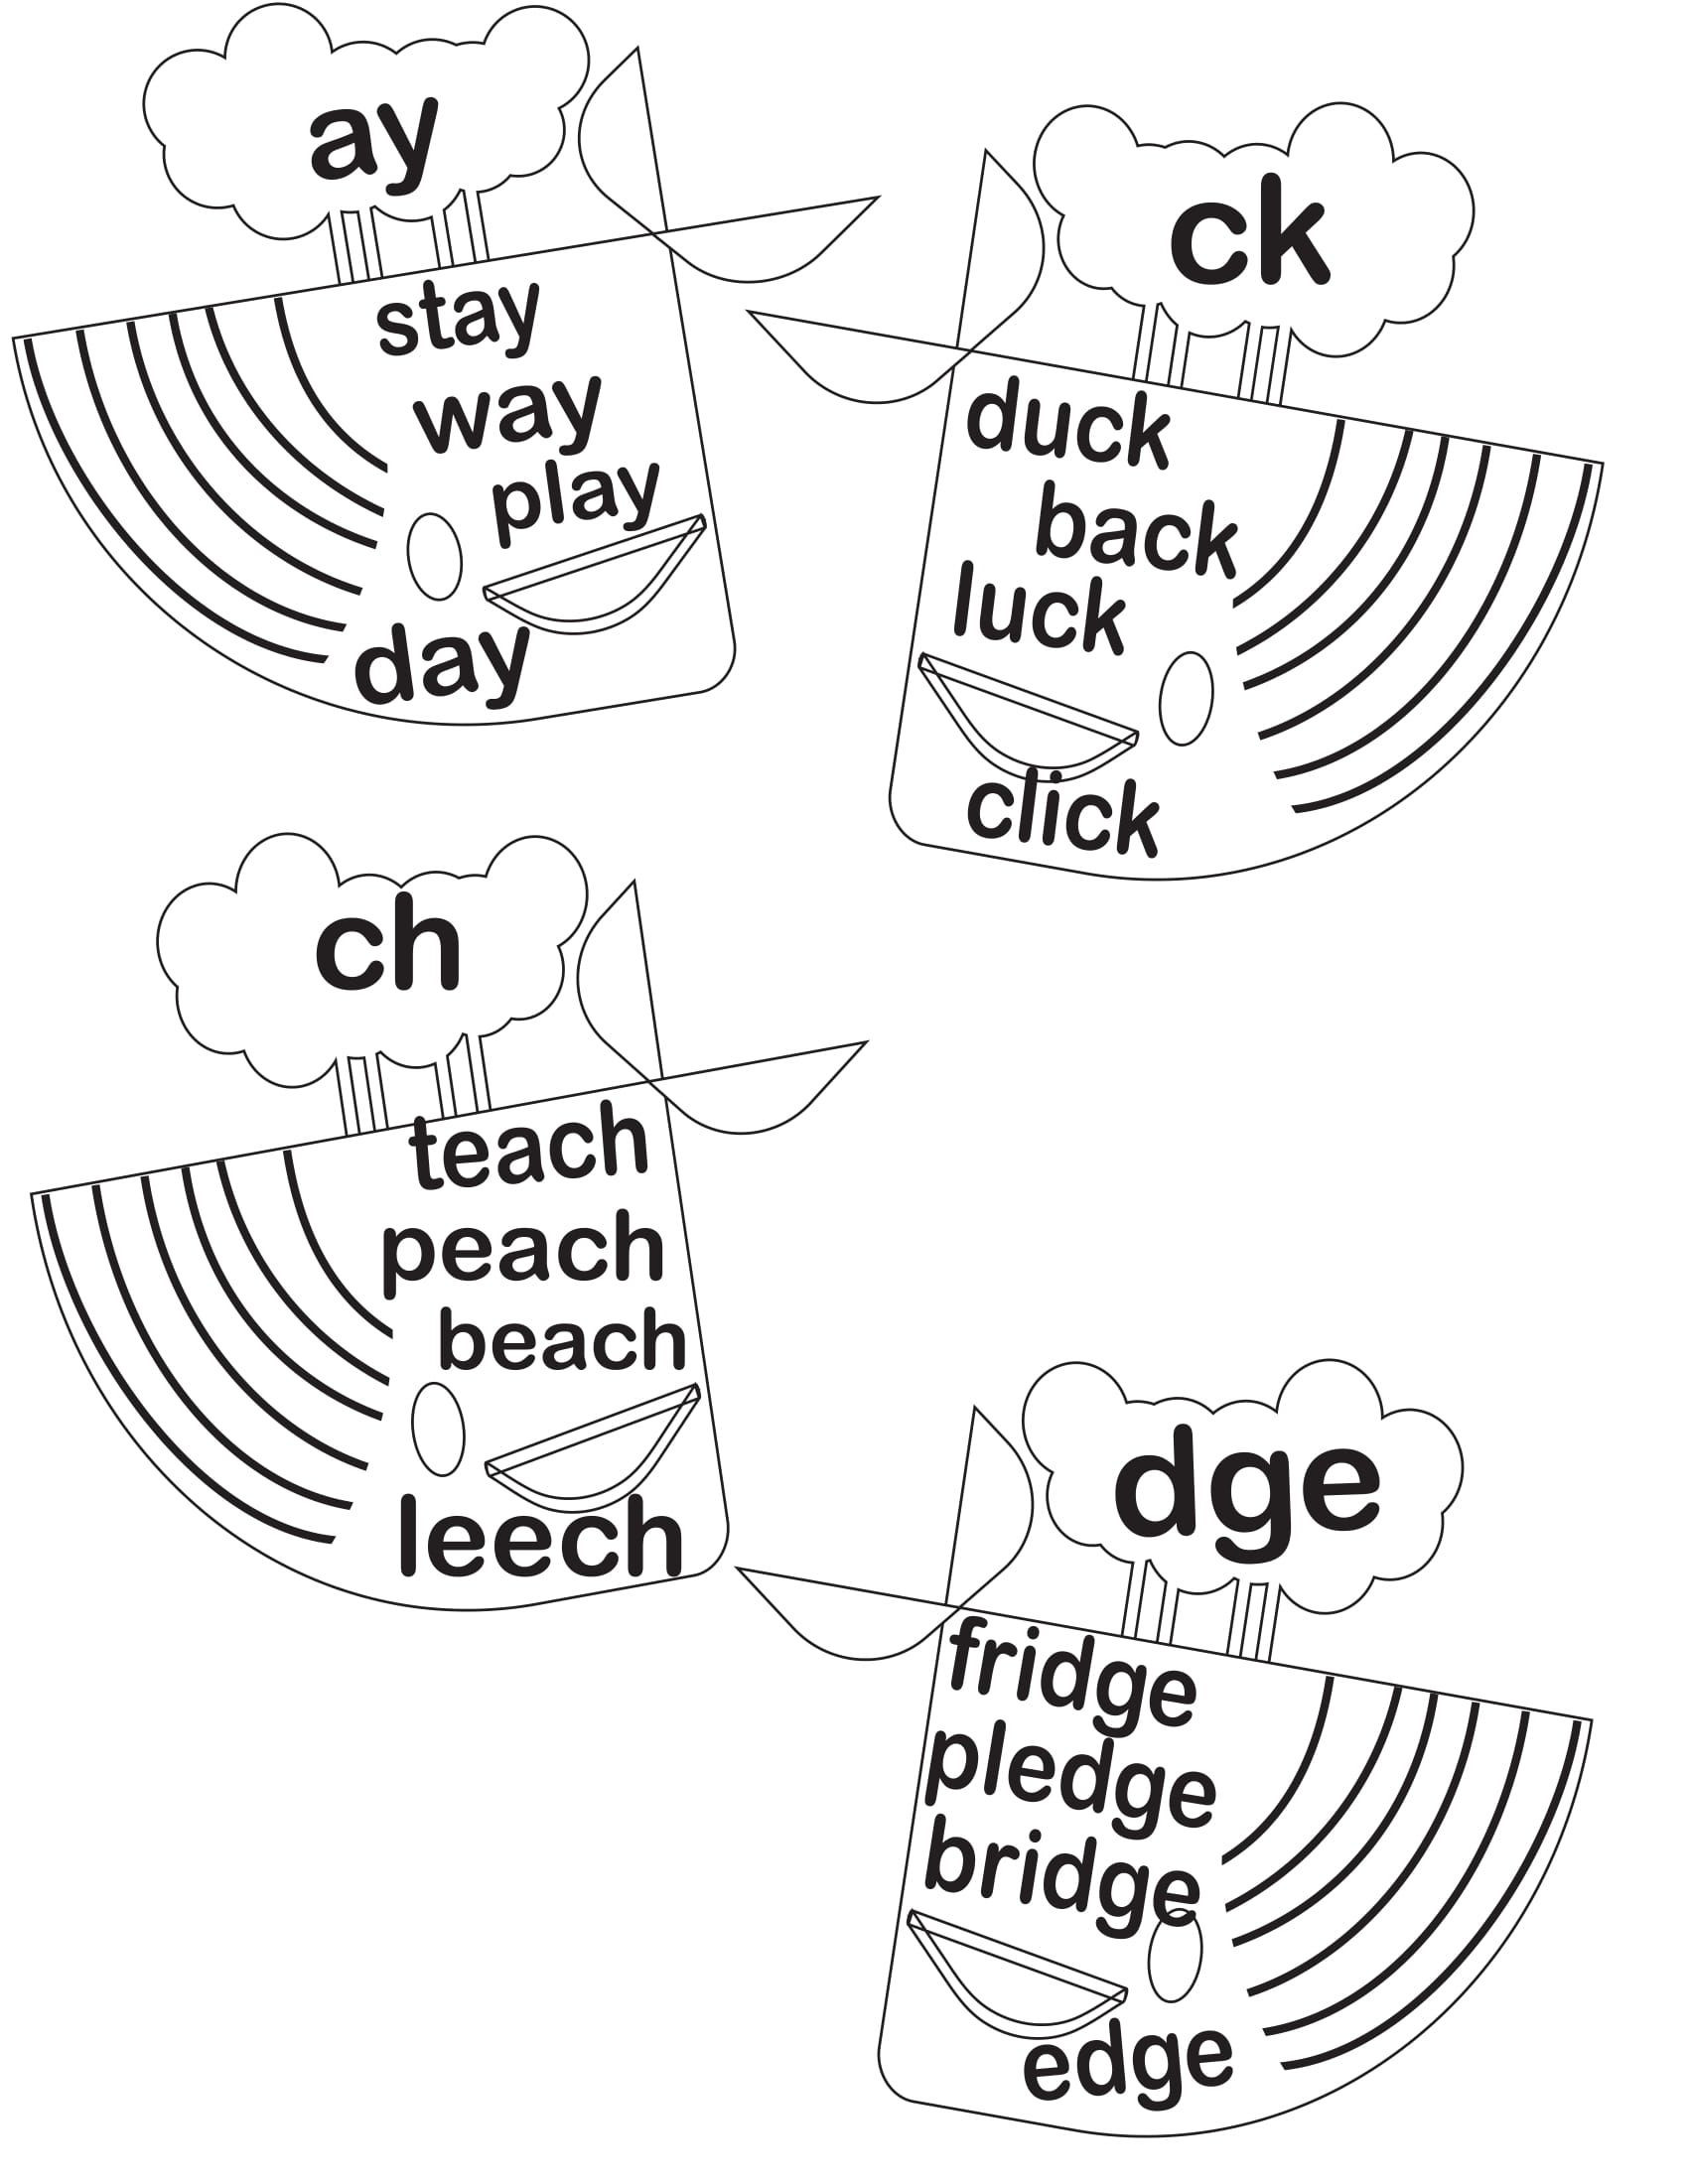 Ck Worksheets for 1st Grade Phonograms Practice the sounds Ay Ck Dge Ch Worksheets Er Ir